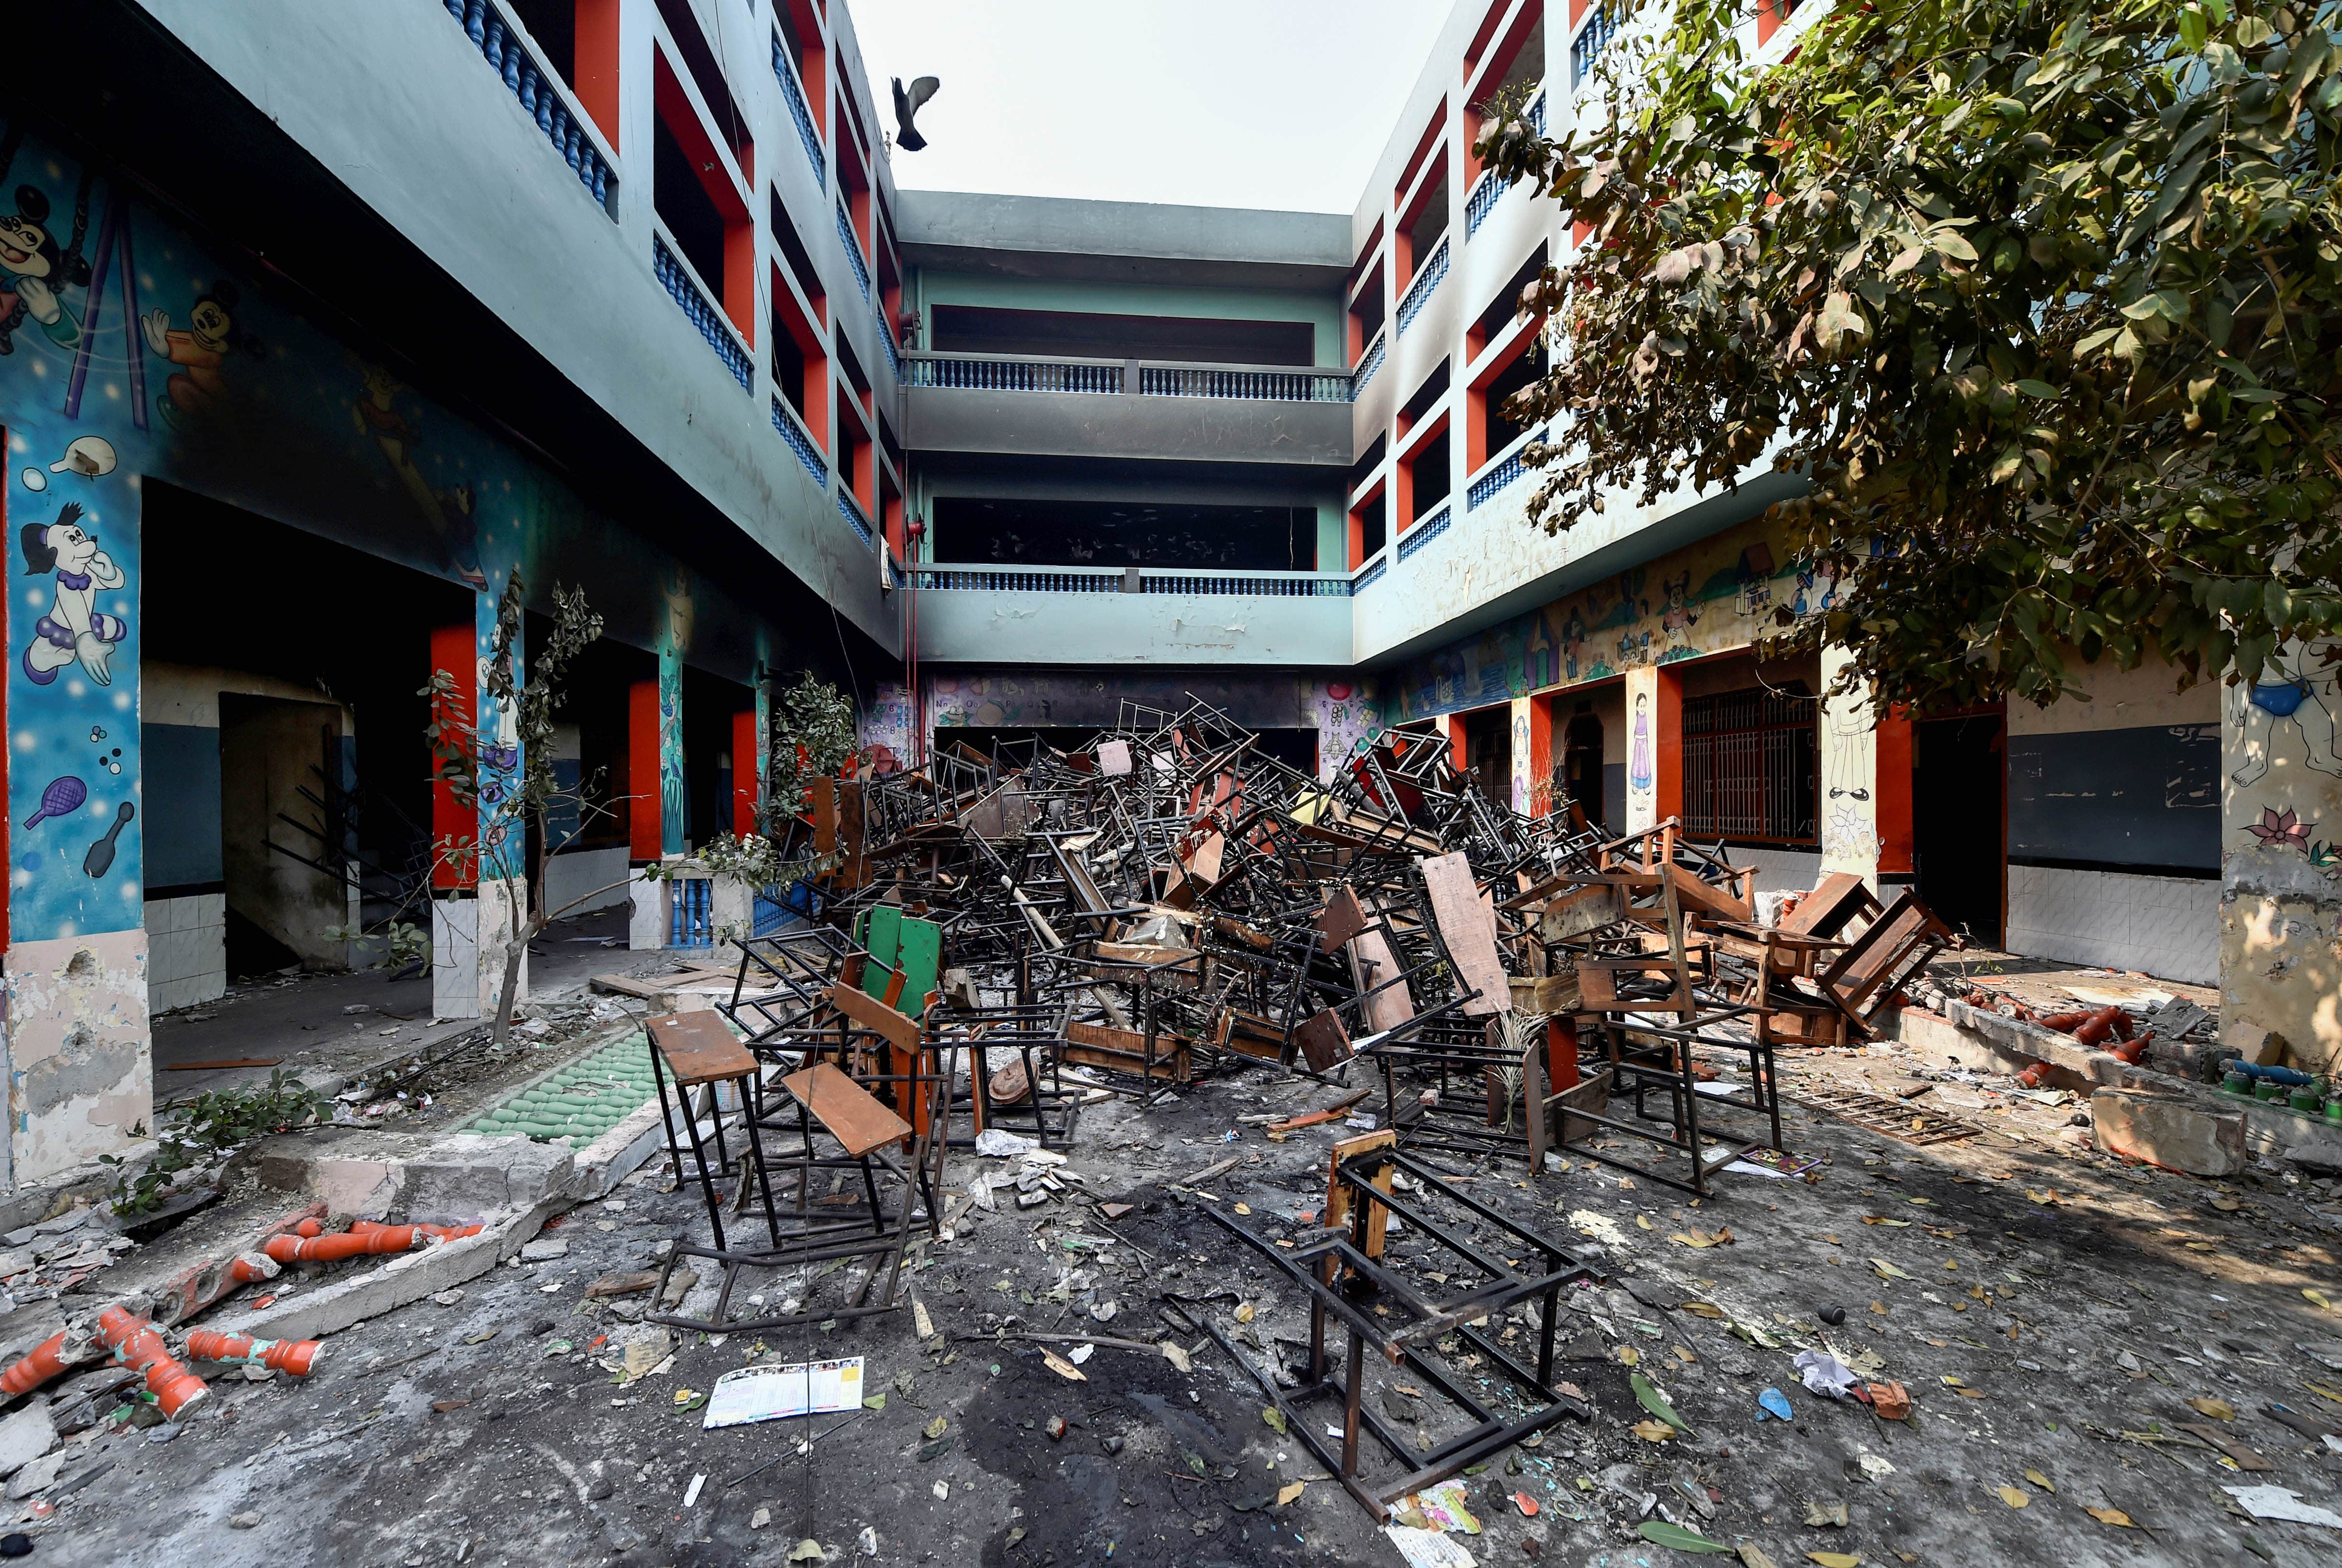 Burnt books, half-charred boards tell tales of vandalised schools in Delhi